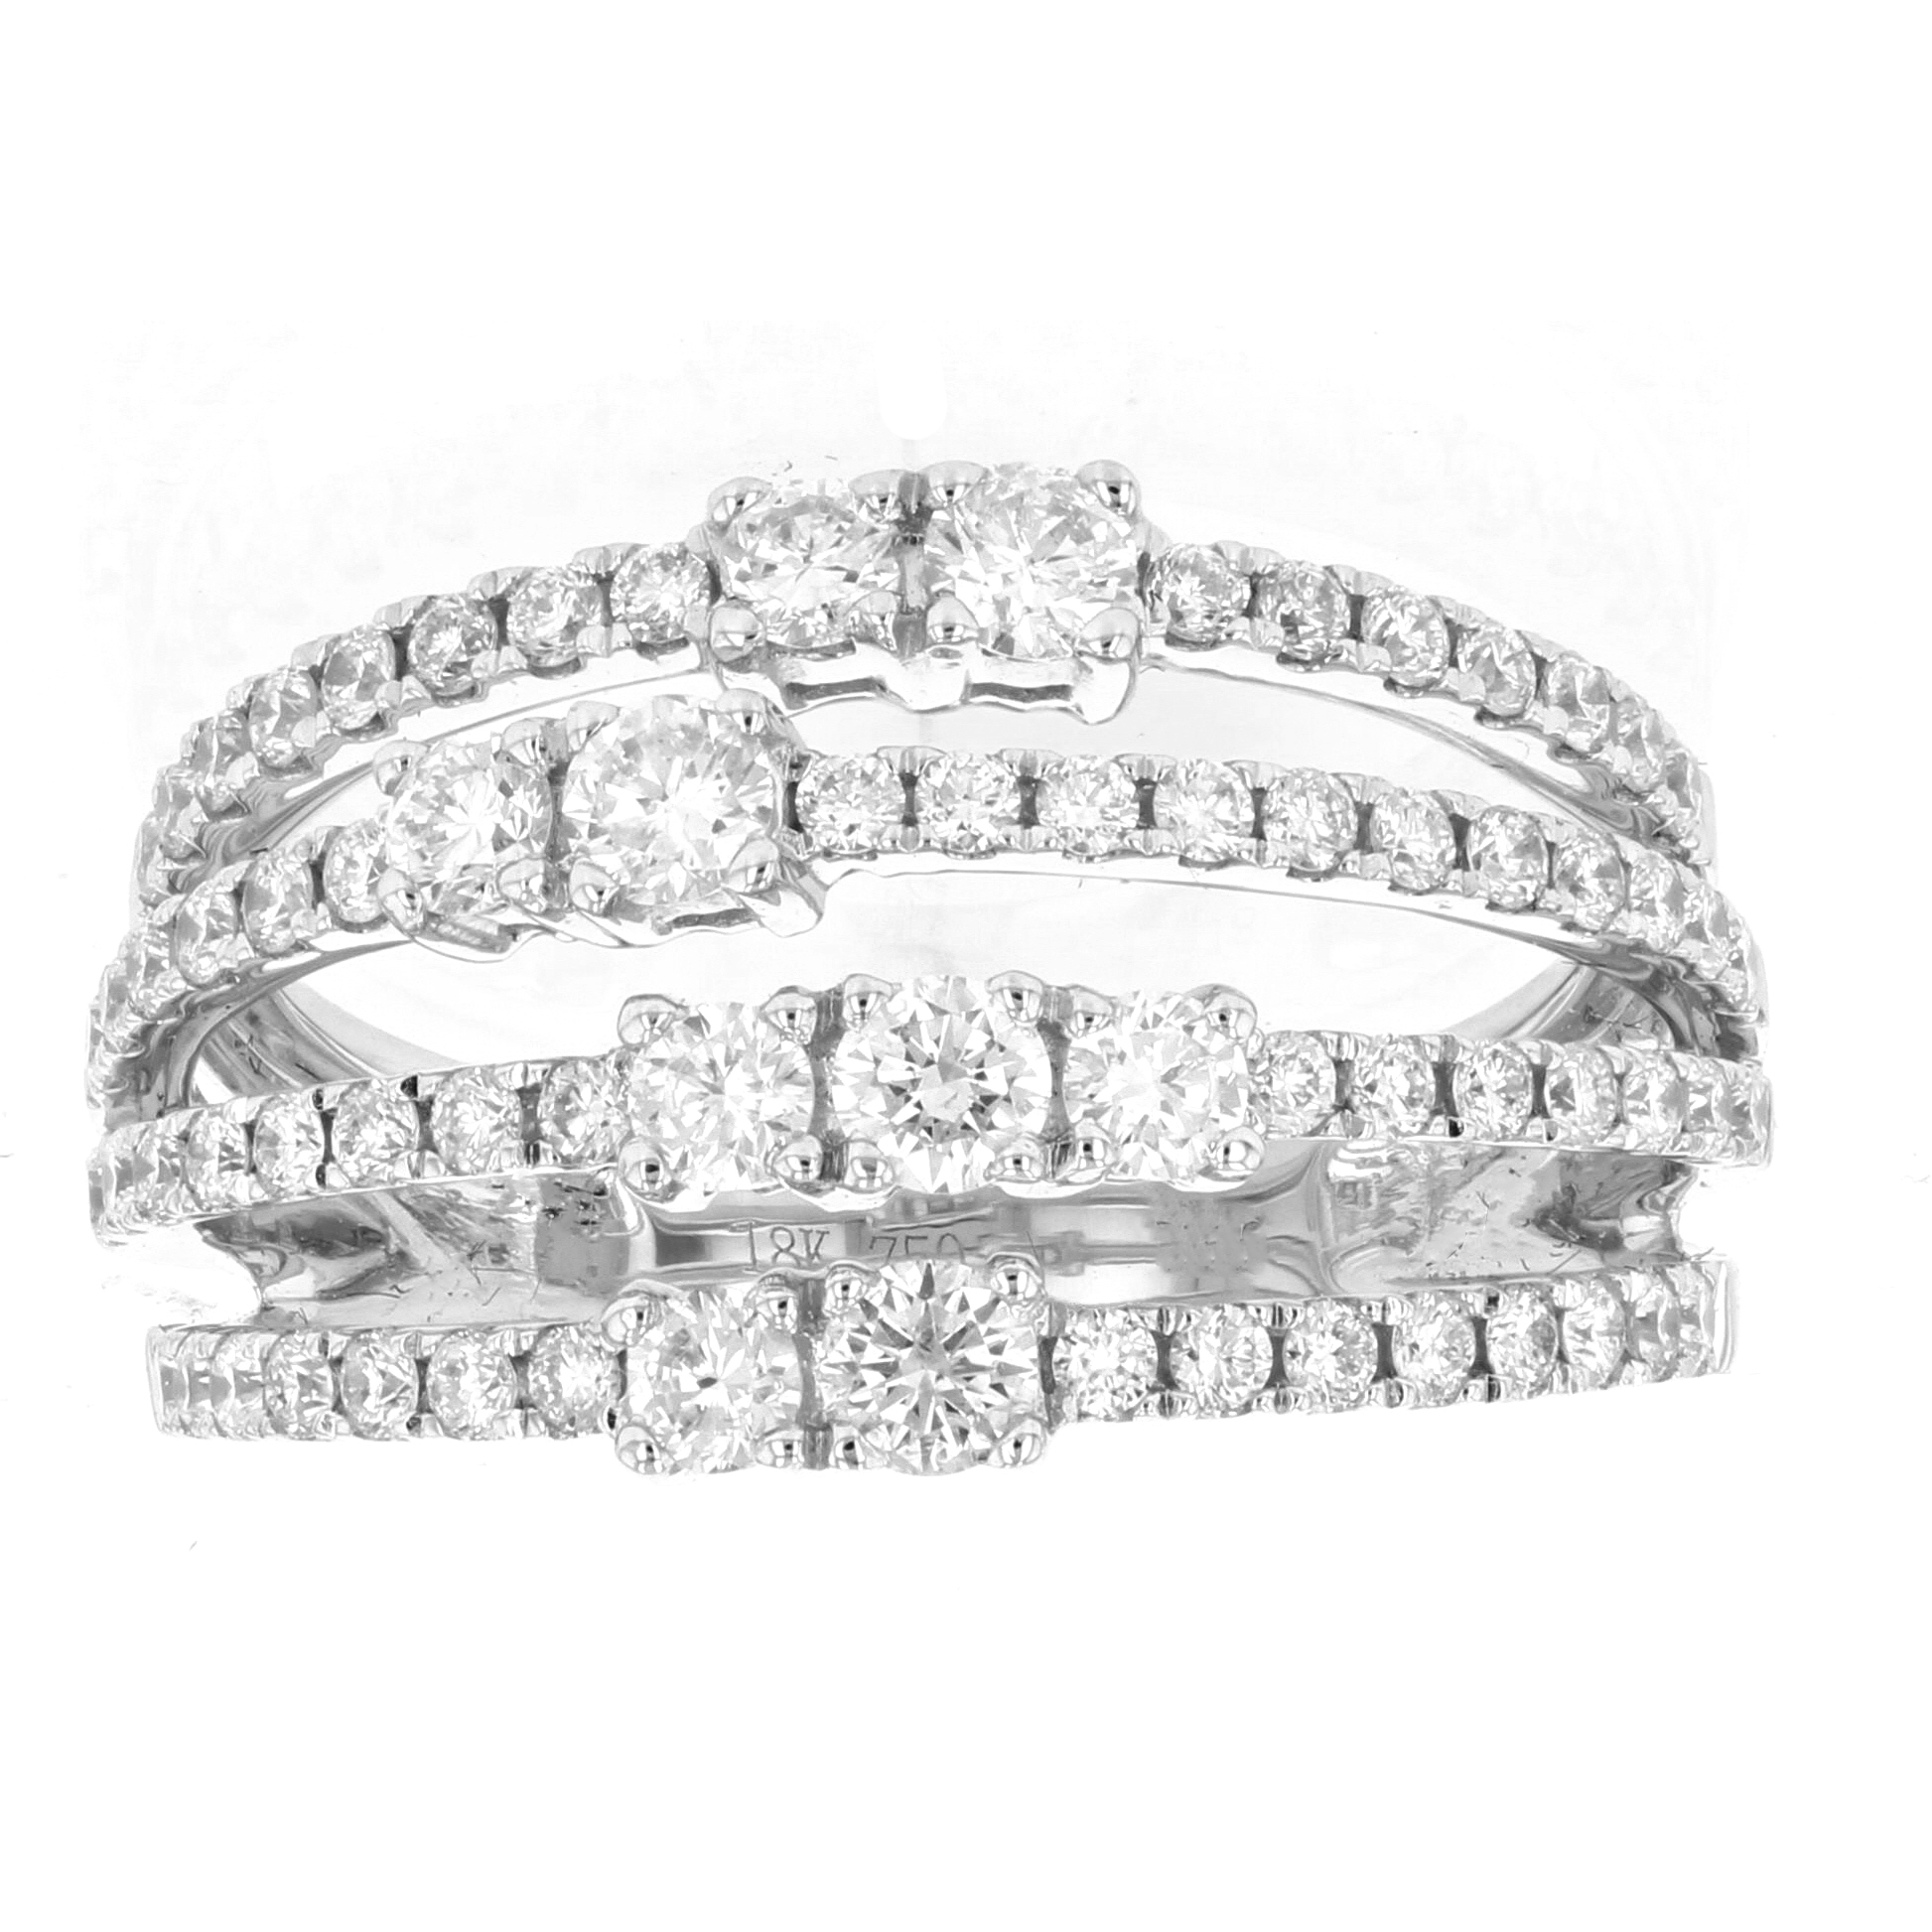 View 1.18ctw Diamond Fashion Ring in 18k White Gold